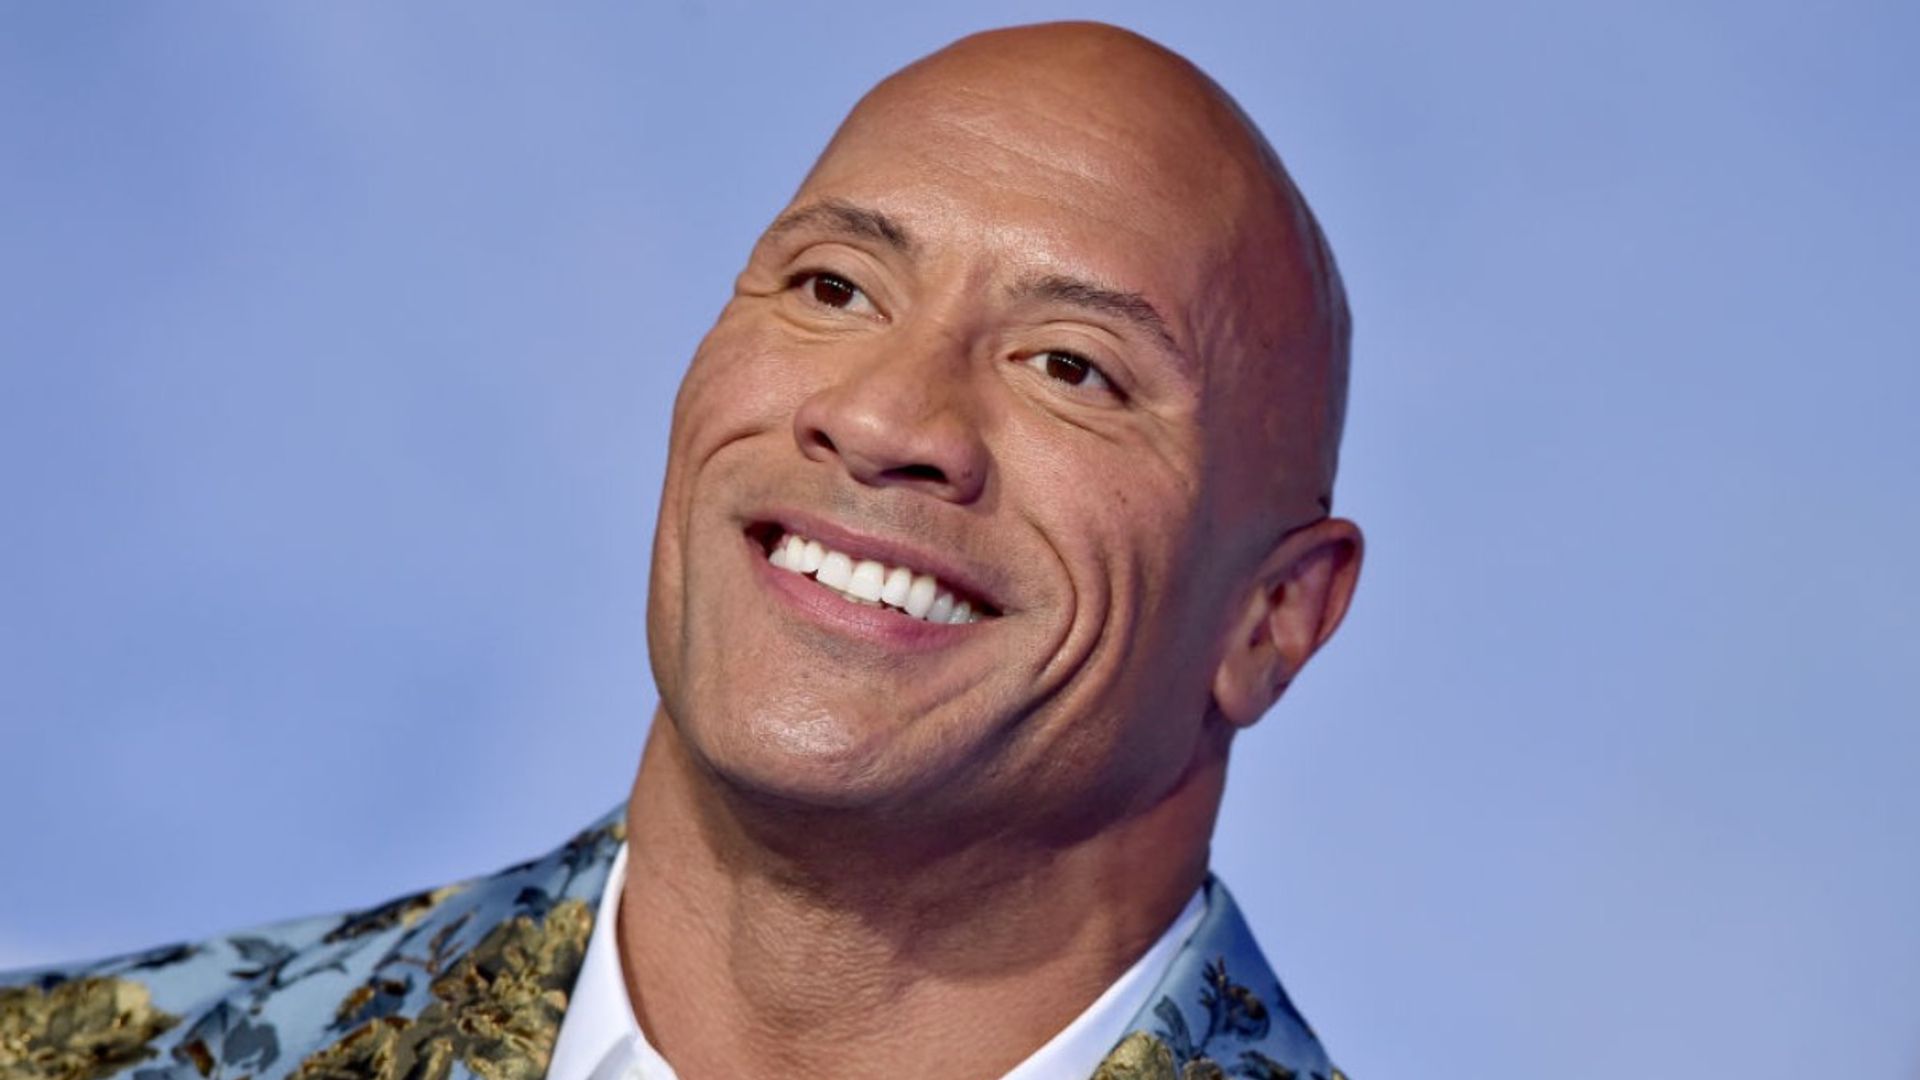 Dwayne 'The Rock' Johnson’s gym selfie is unbelievable | HELLO!